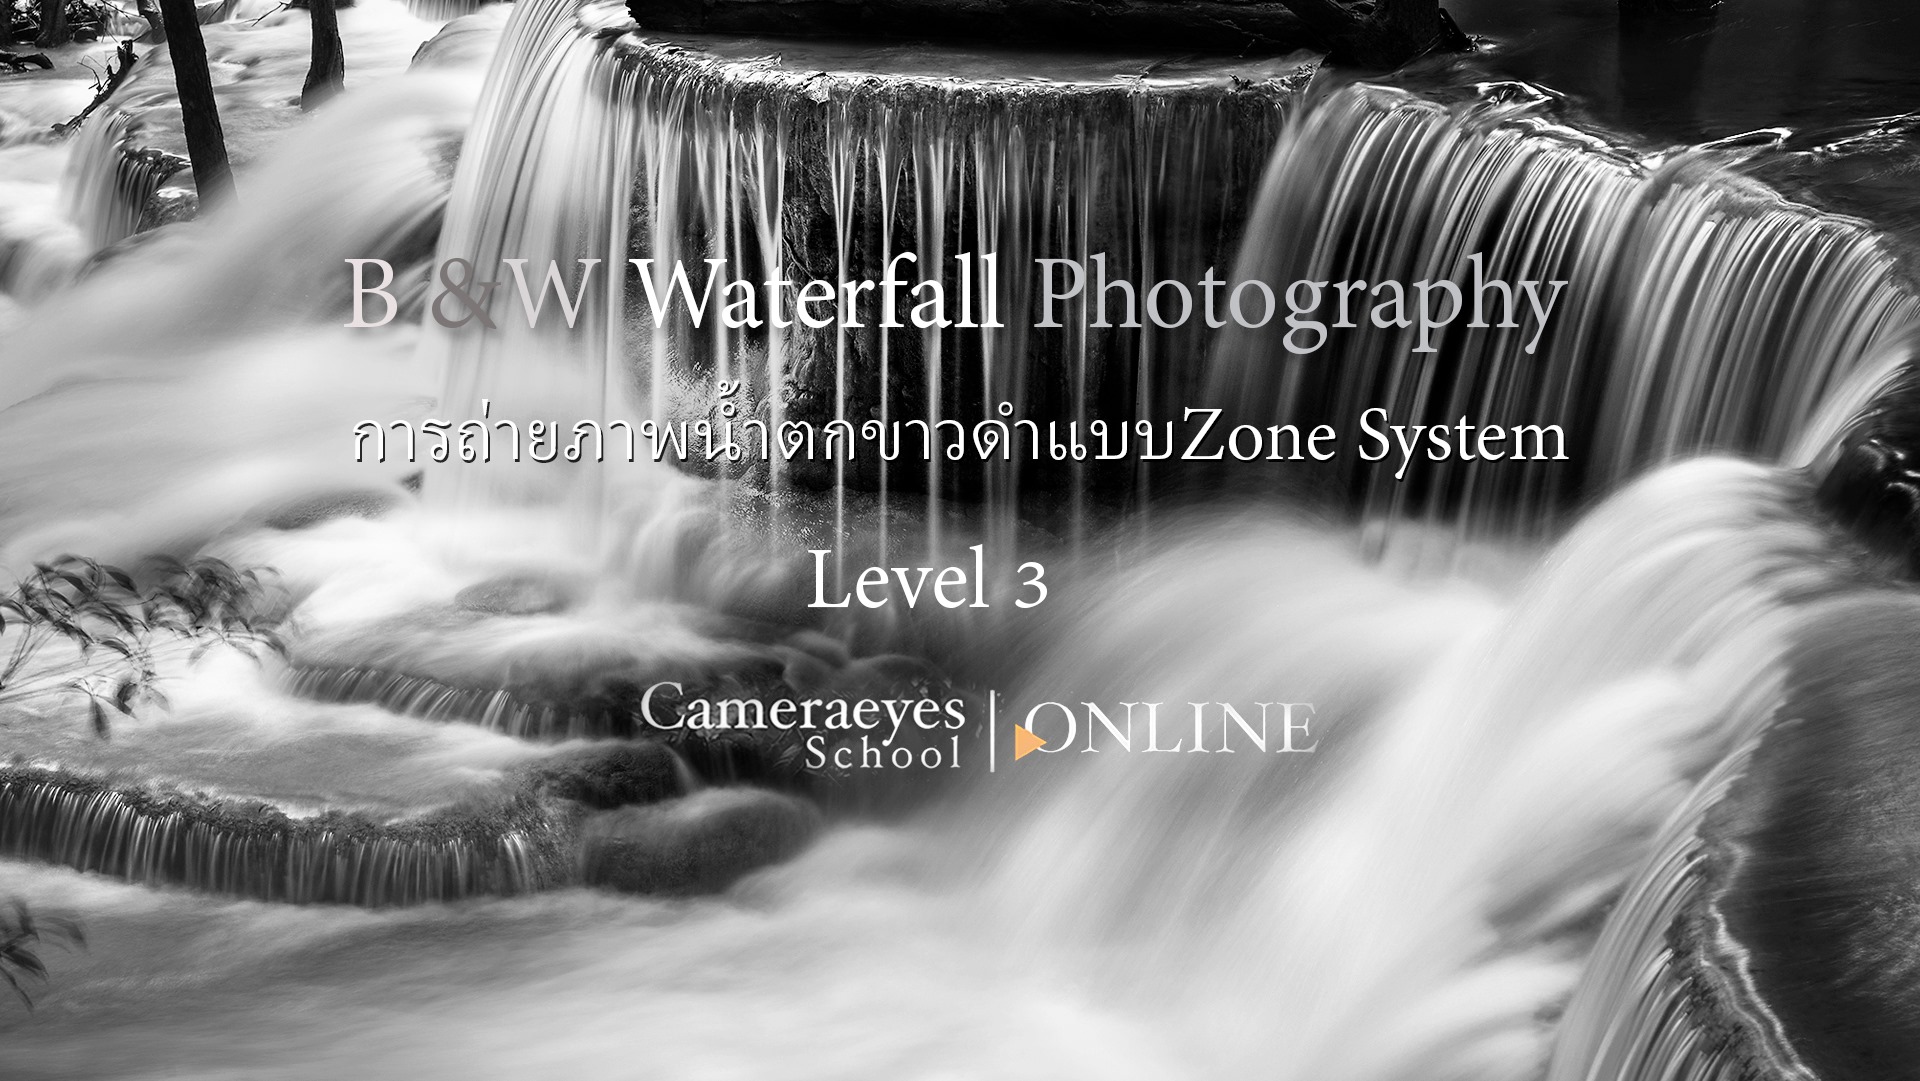 B&W Waterfall Photography (OnLine)